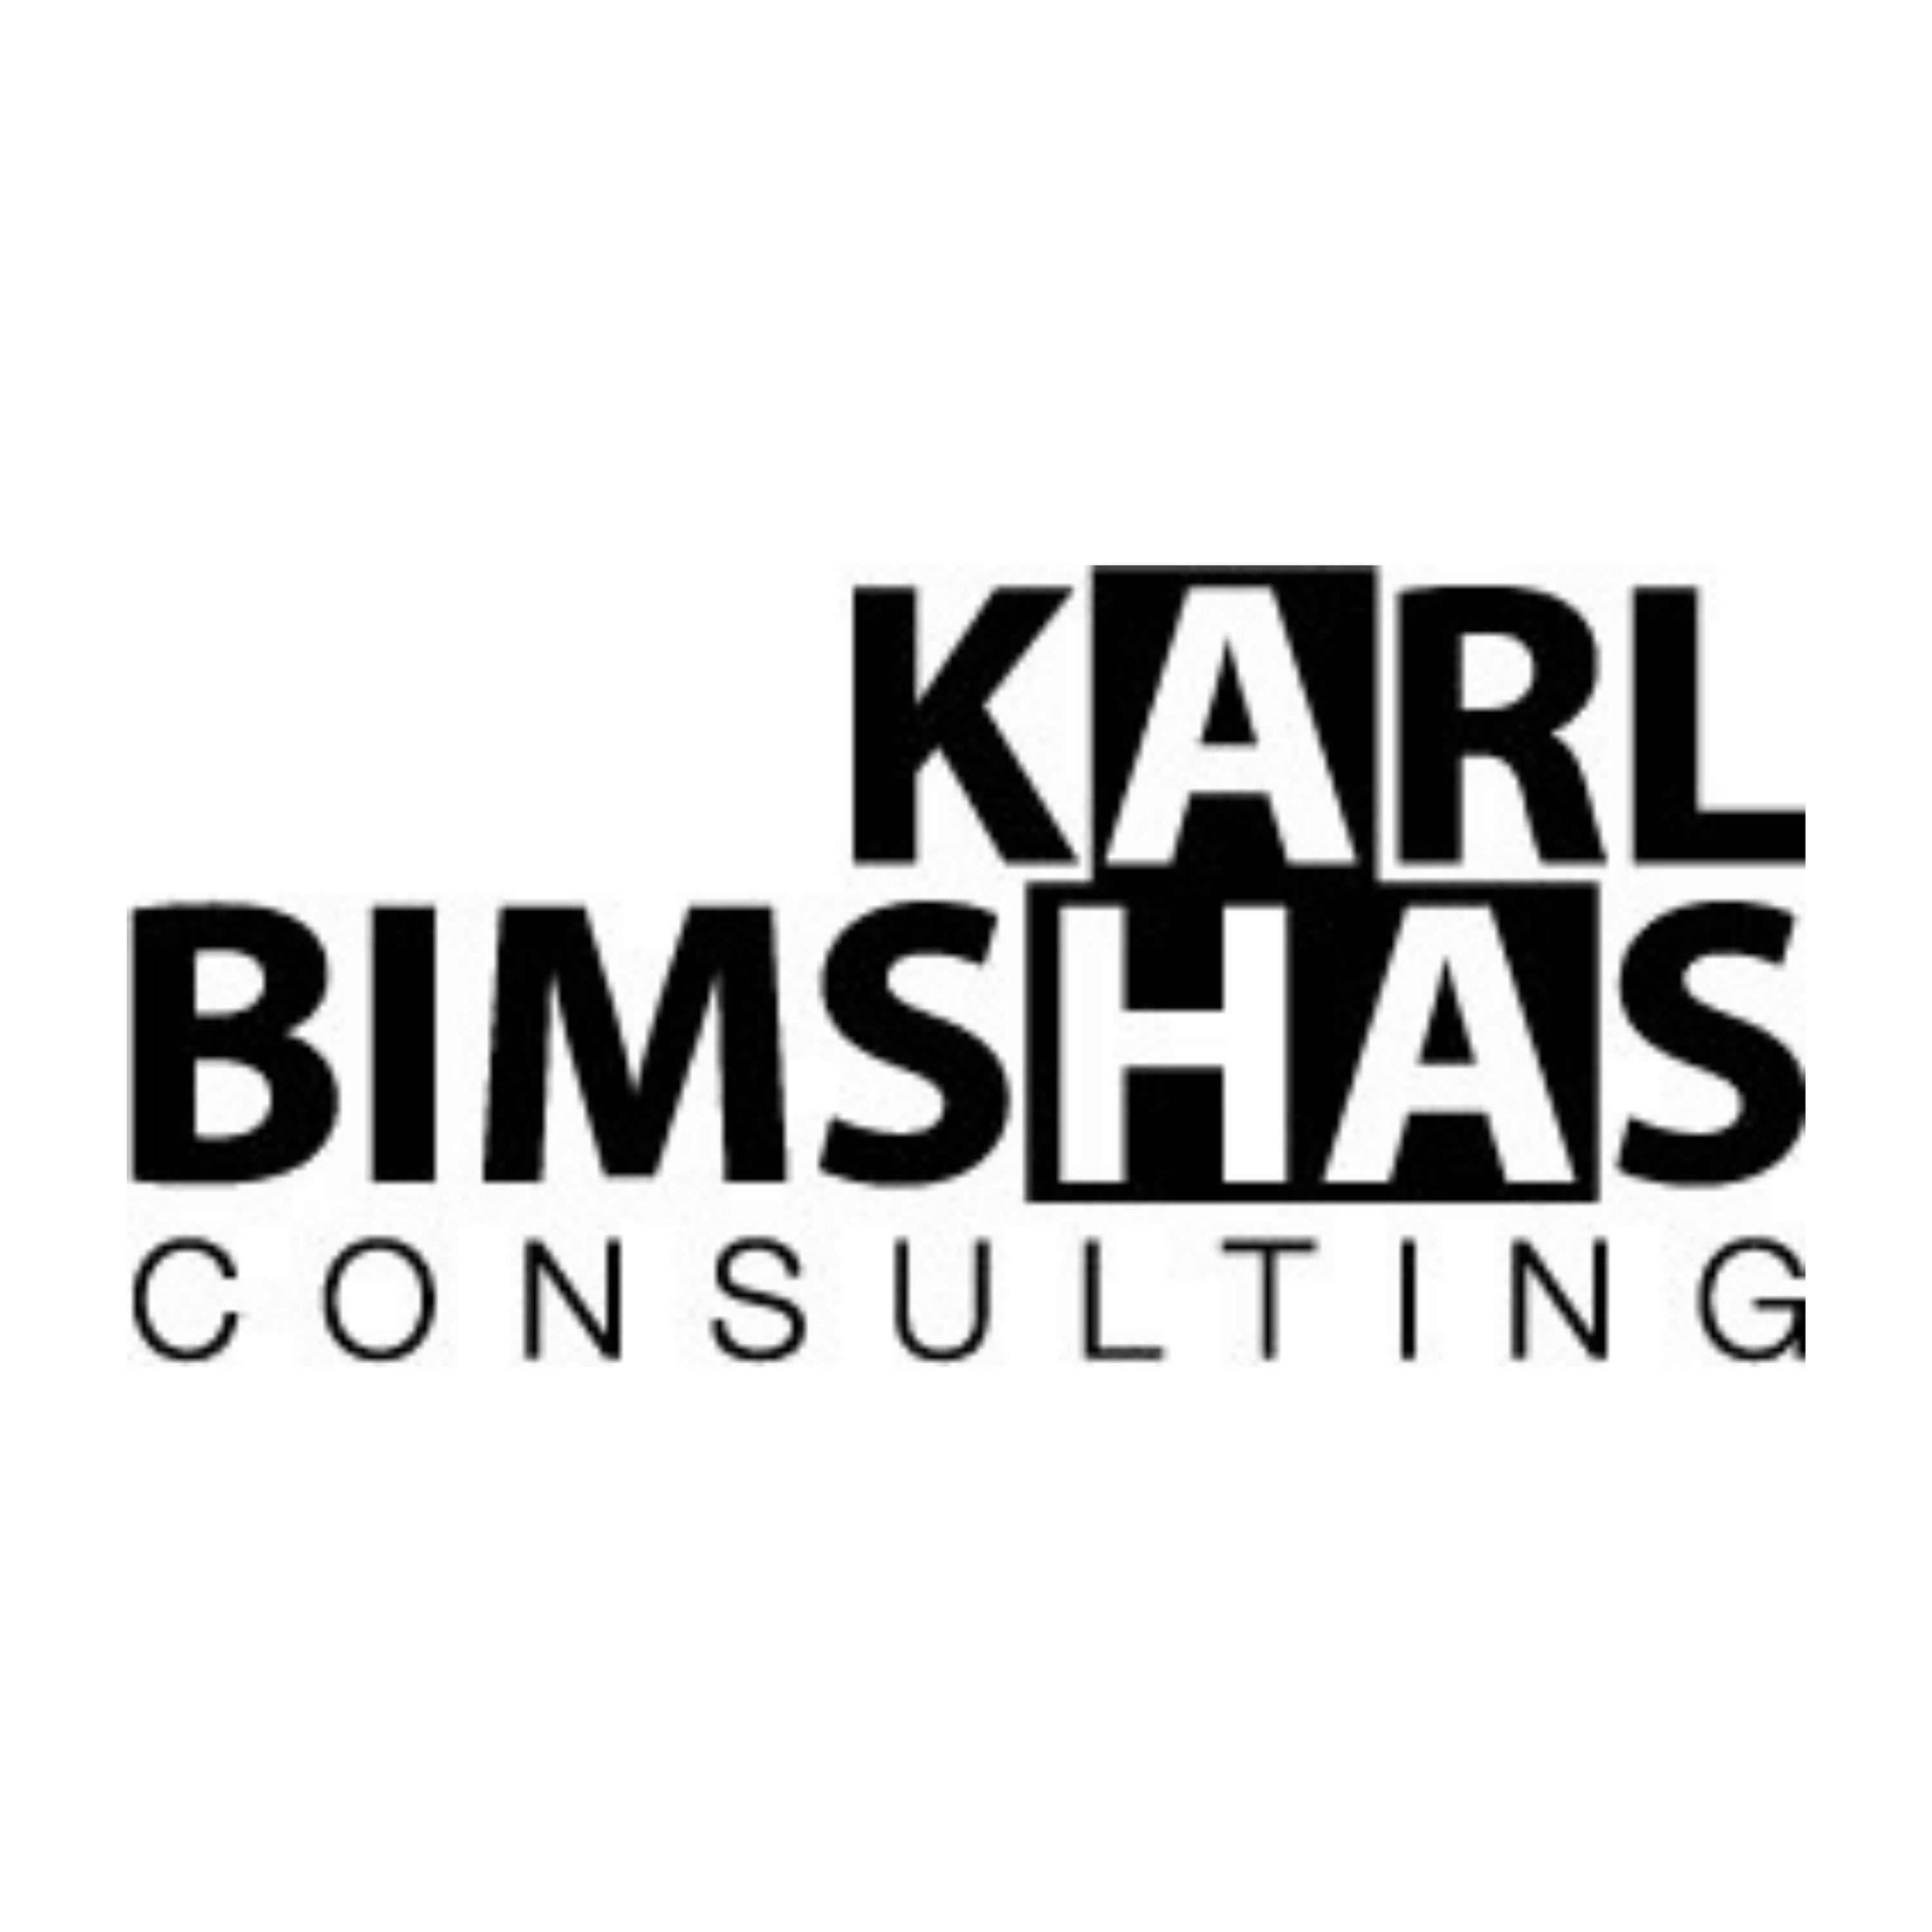 Karl Bimshas Consulting